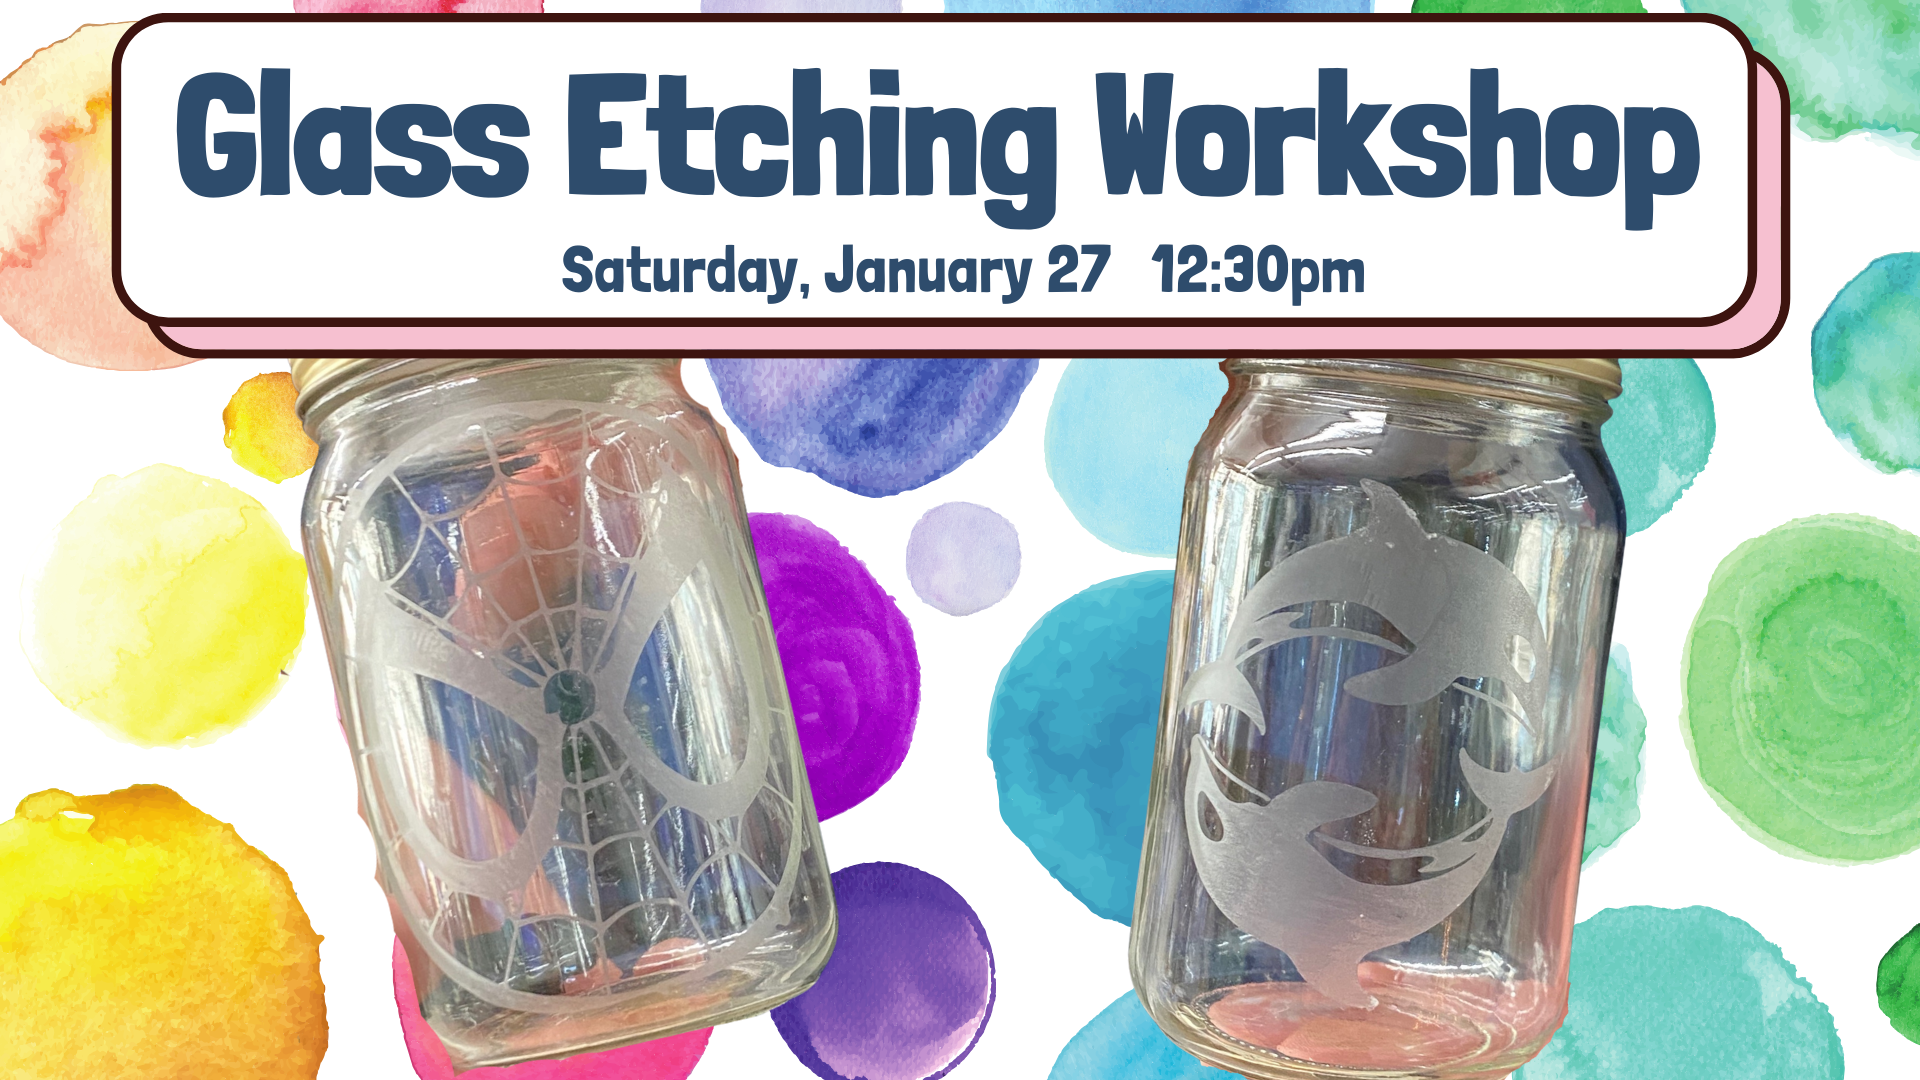 Glass Etching Workshop Flyer